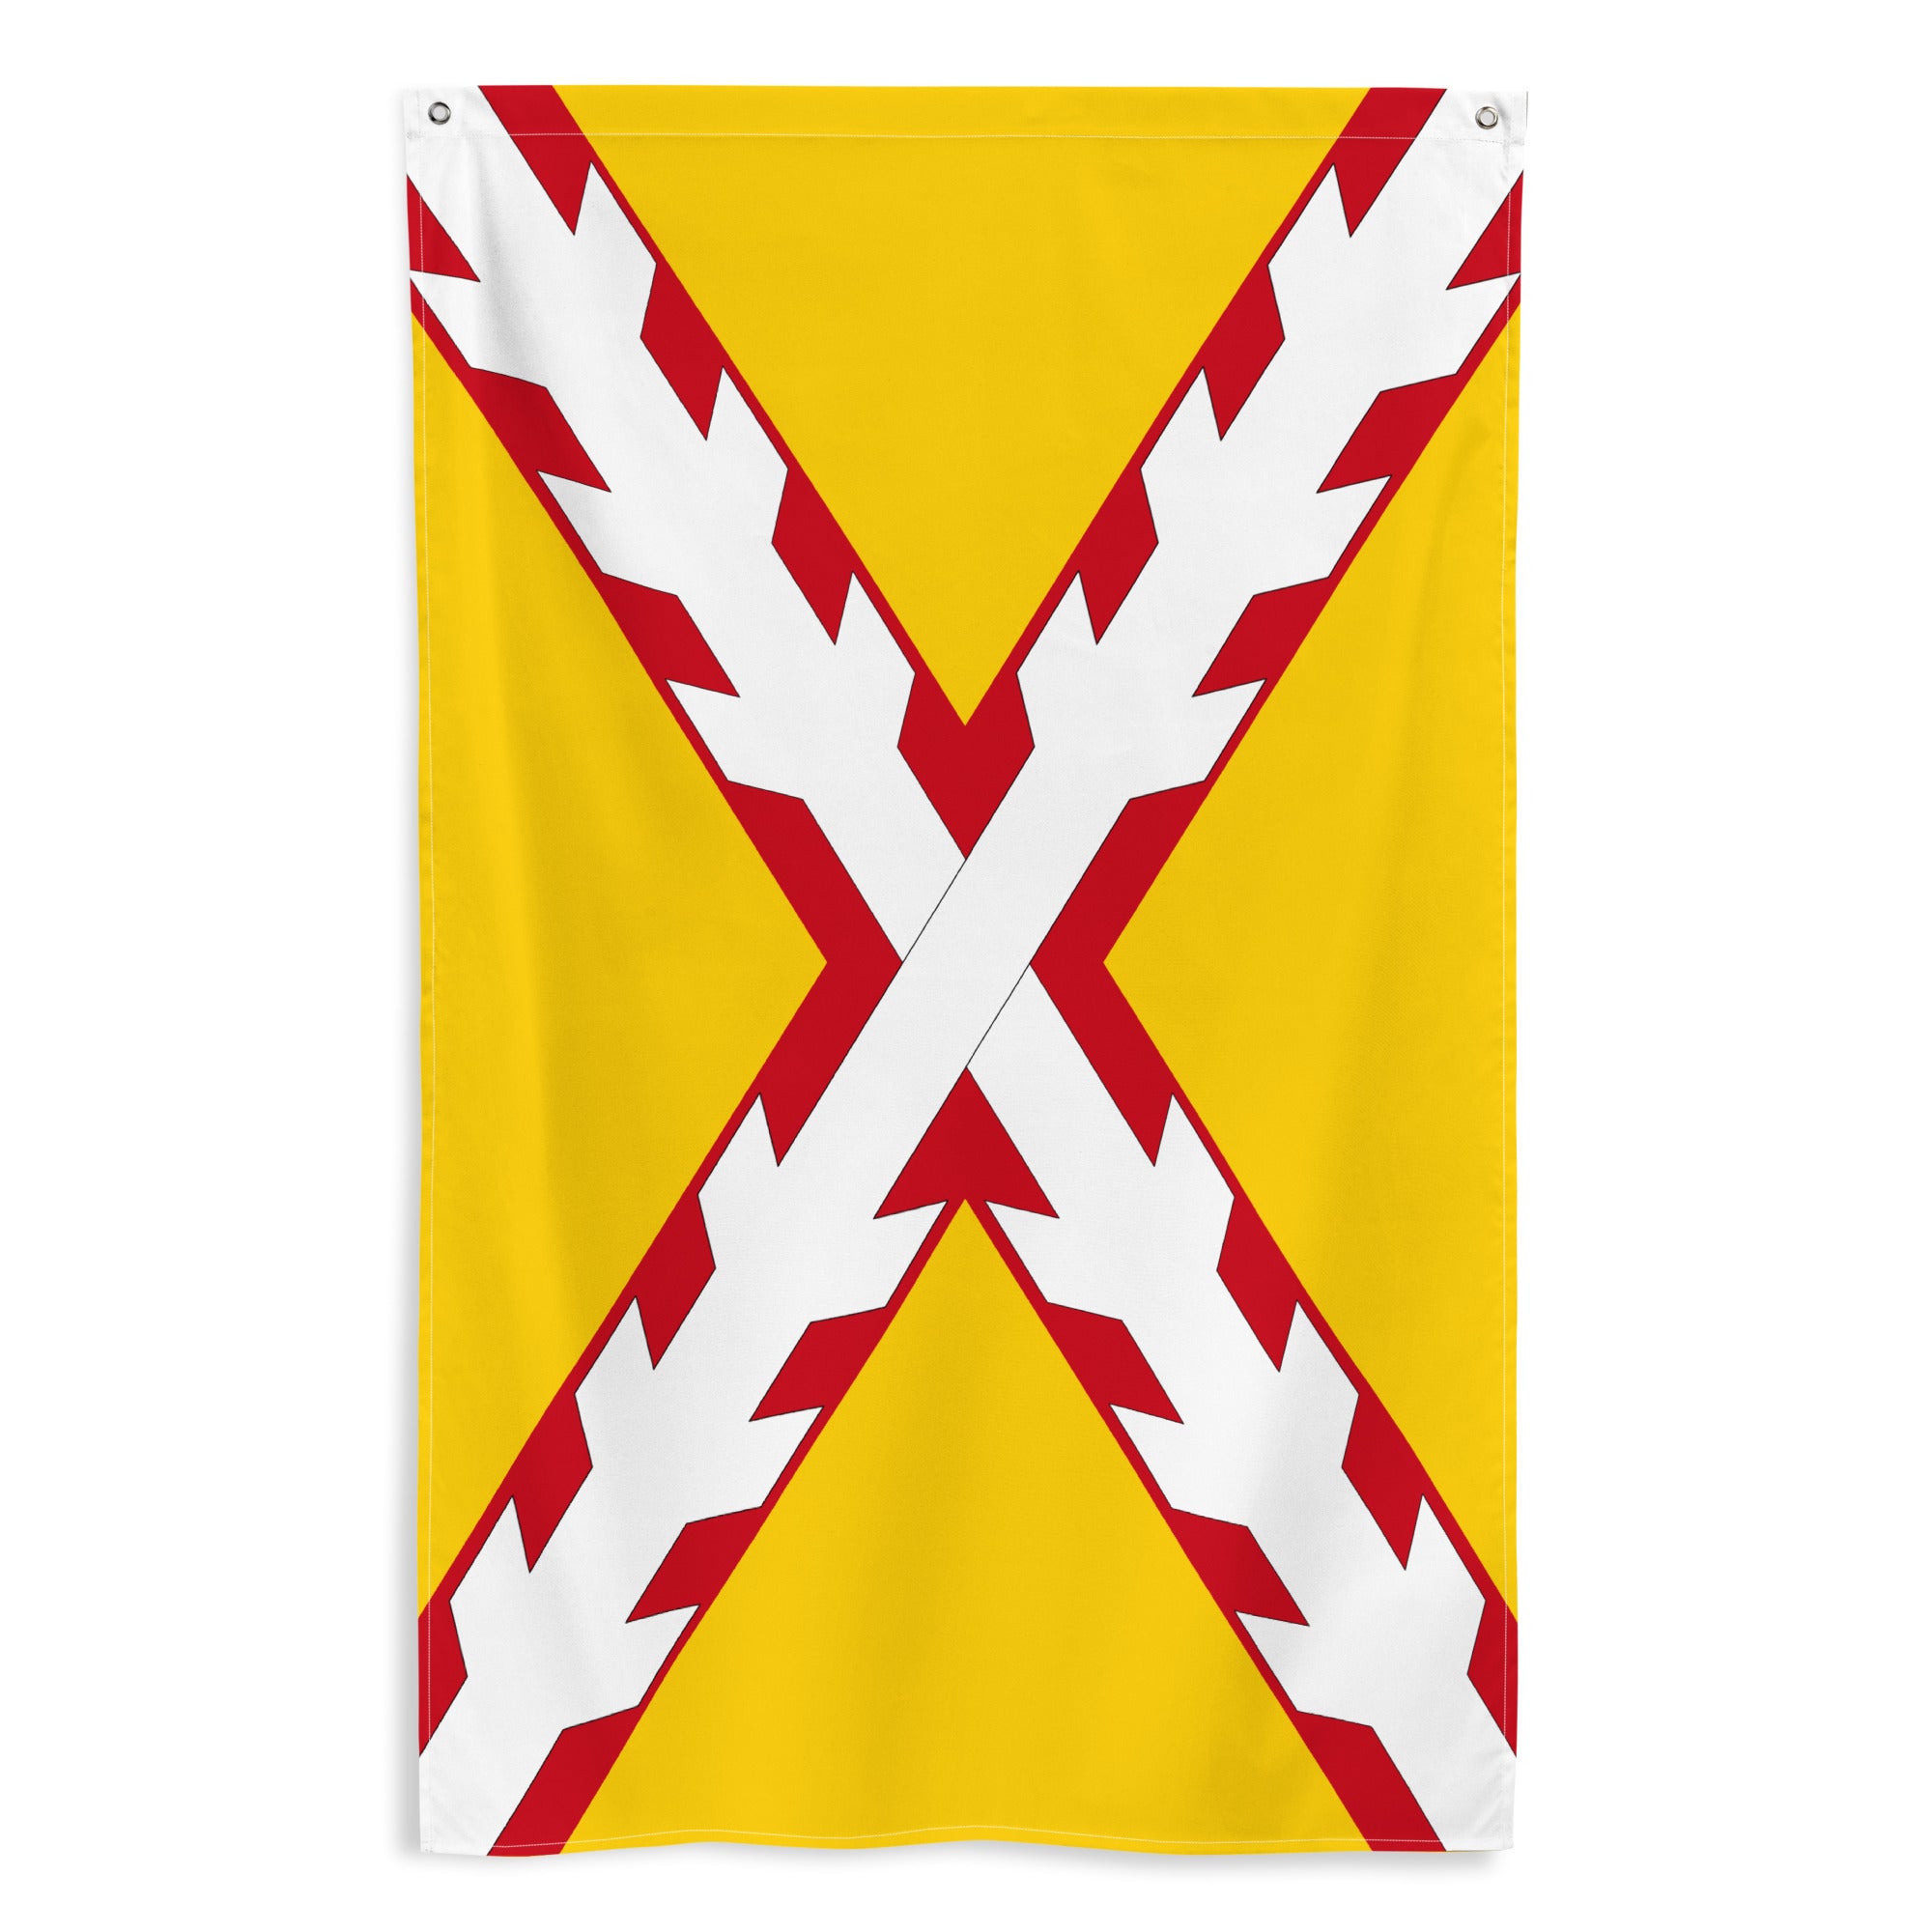 Bandeira Cruzada da Borgonha